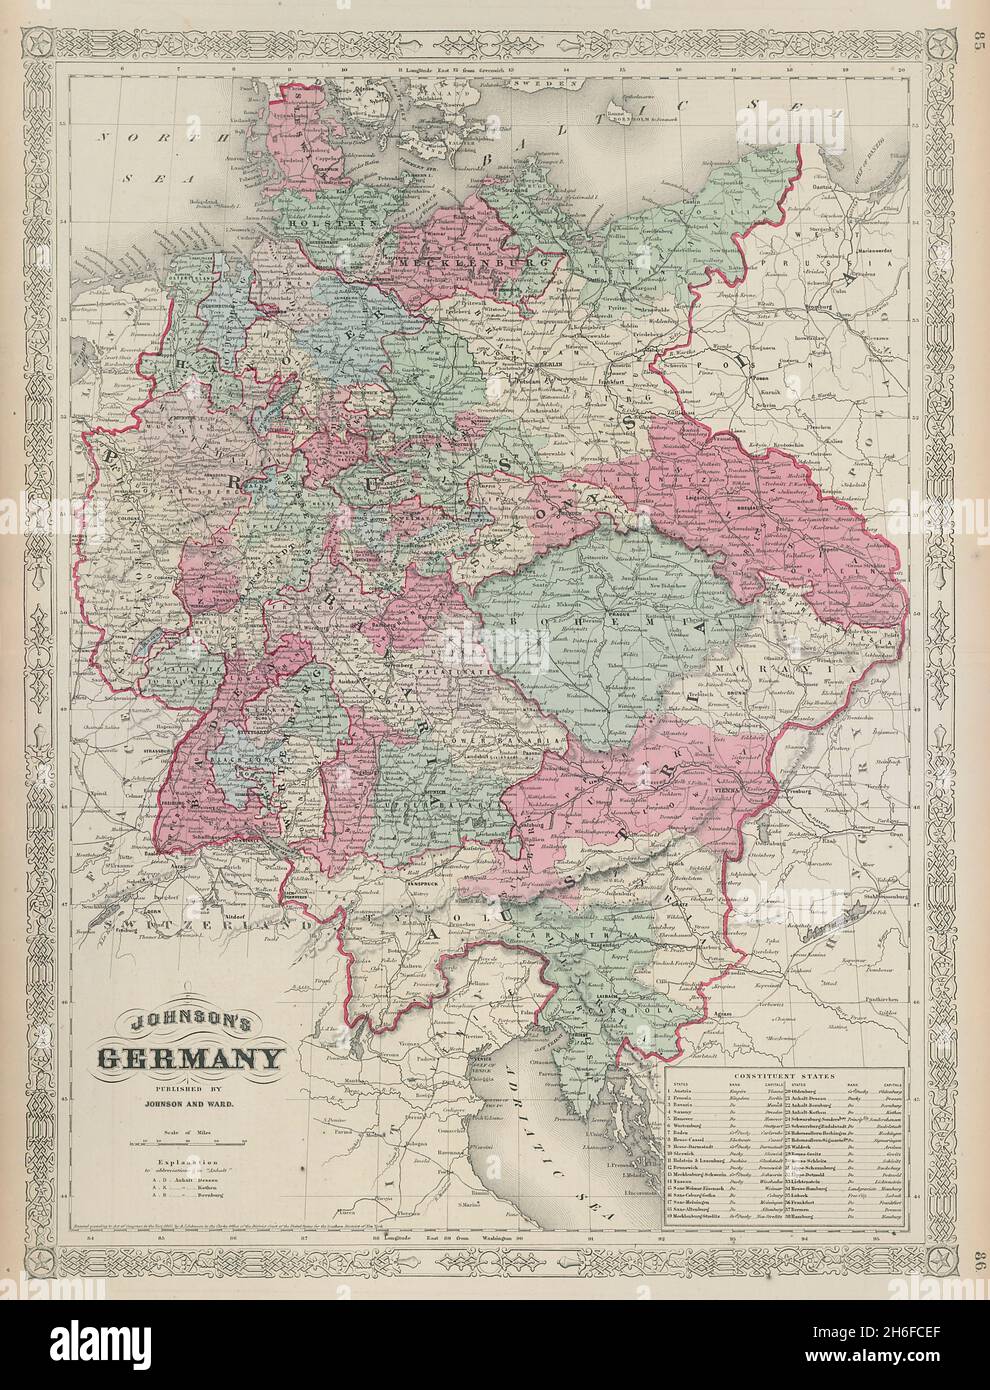 Johnson's Germany. Prussia Austria Bohemia Moravia Czech Republic Tyrol 1865 map Stock Photo